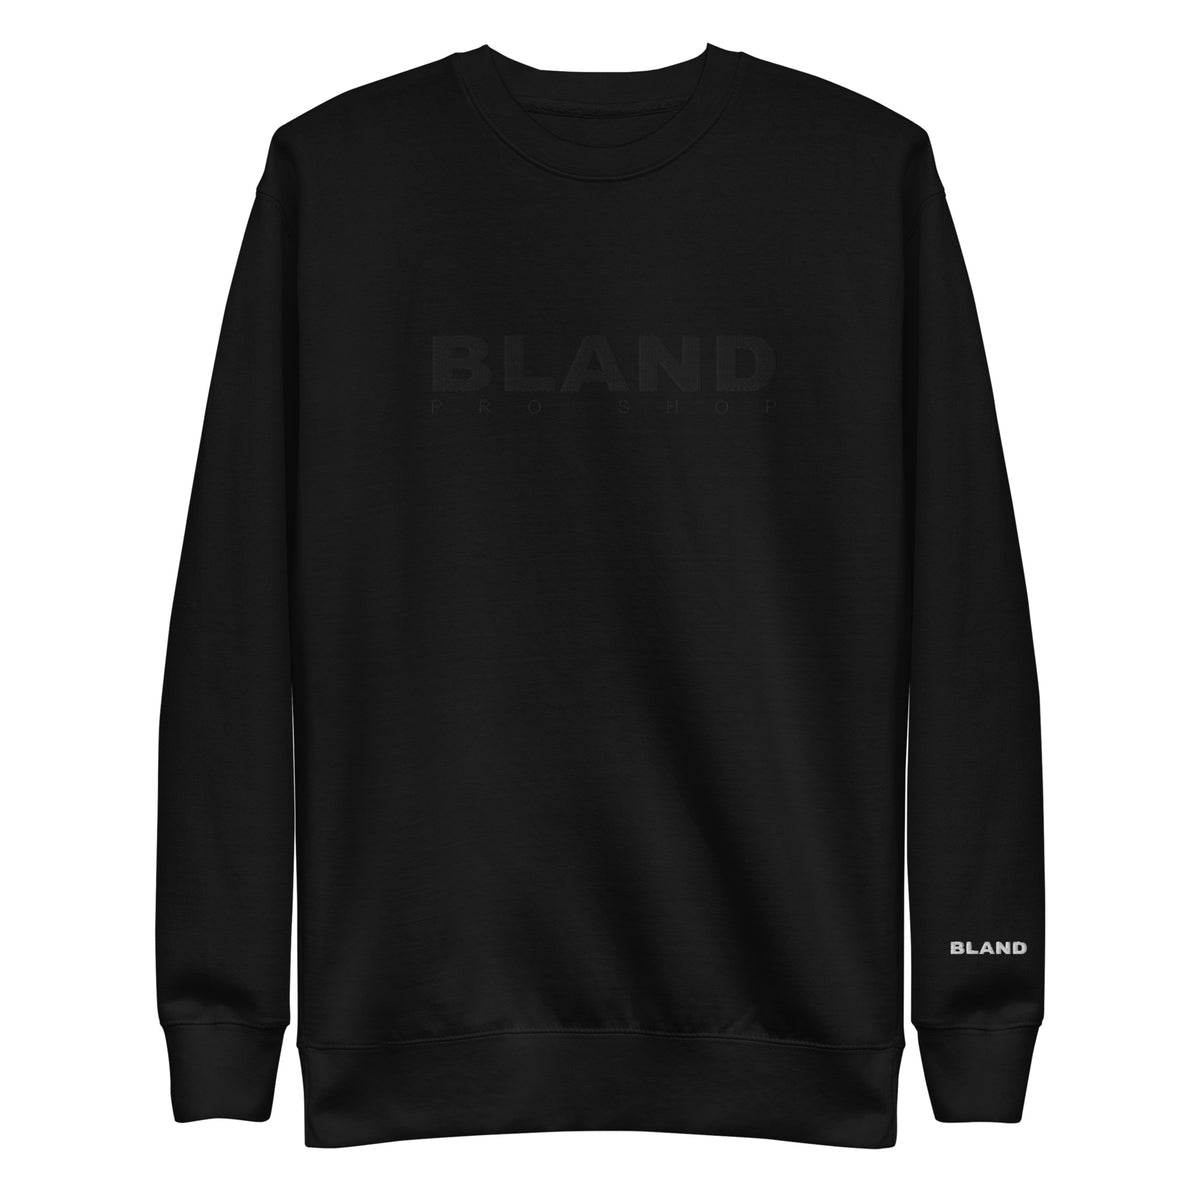 Bland Logo Stealth Sweatshirt